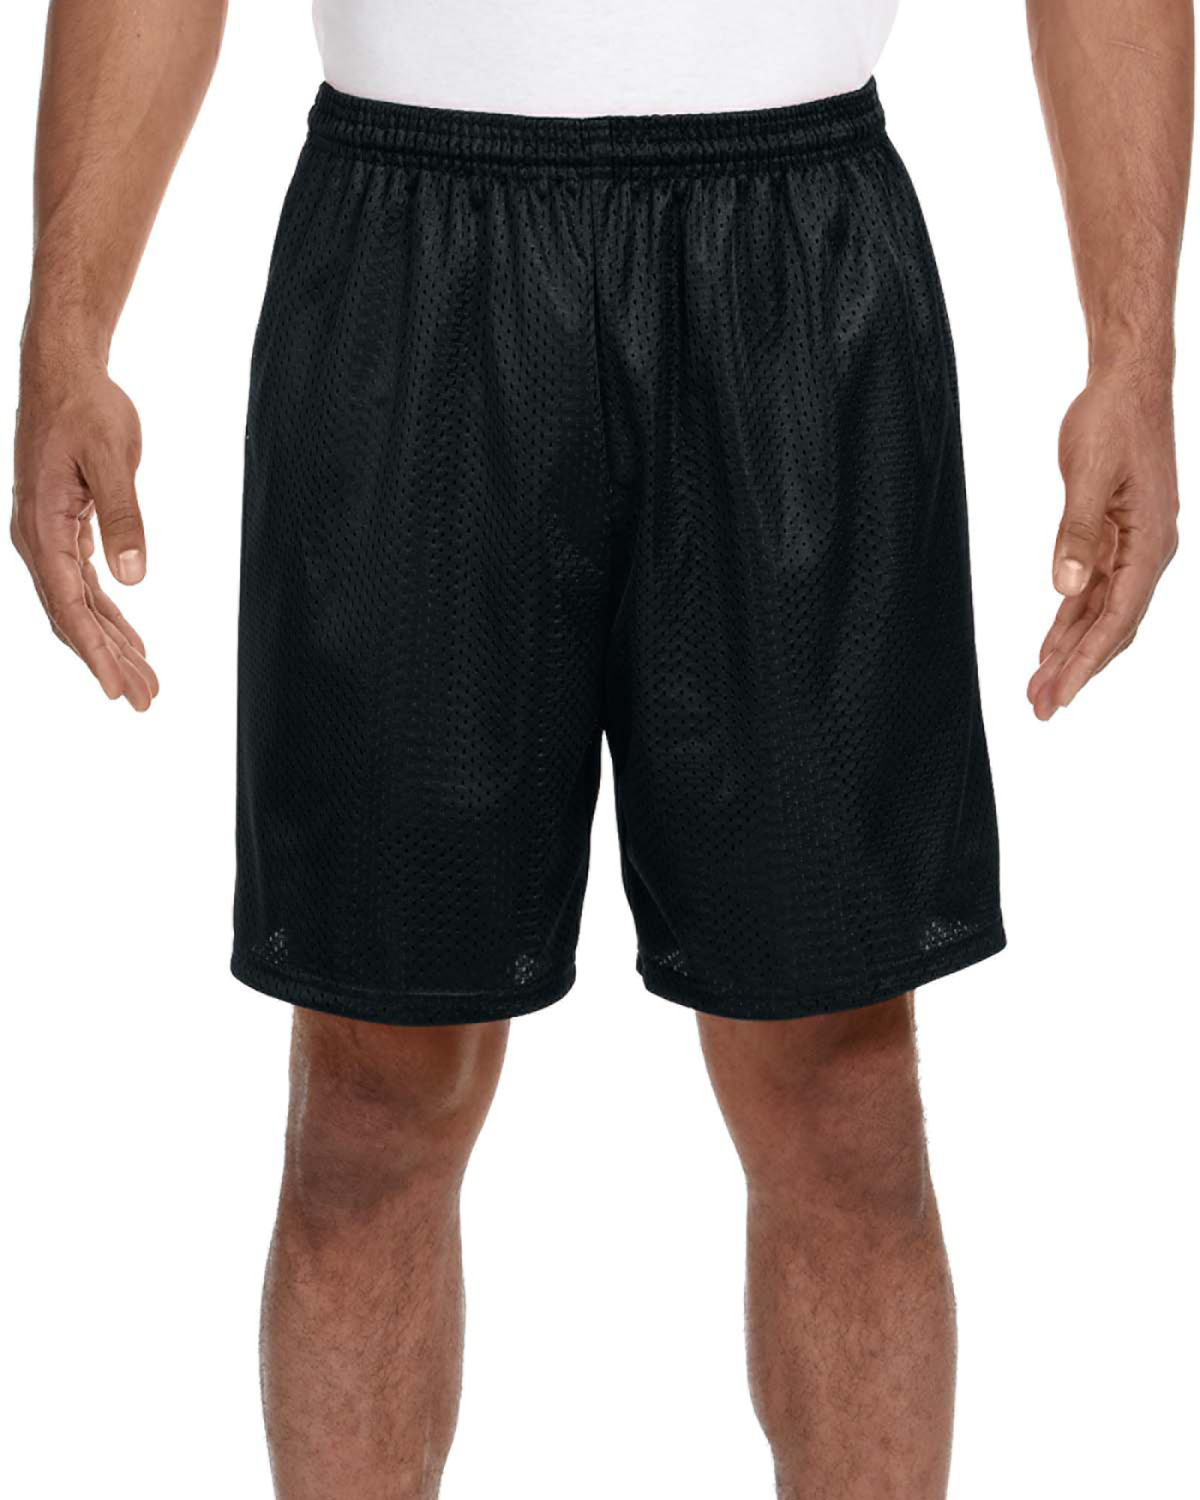 Grappler Mesh Shorts 